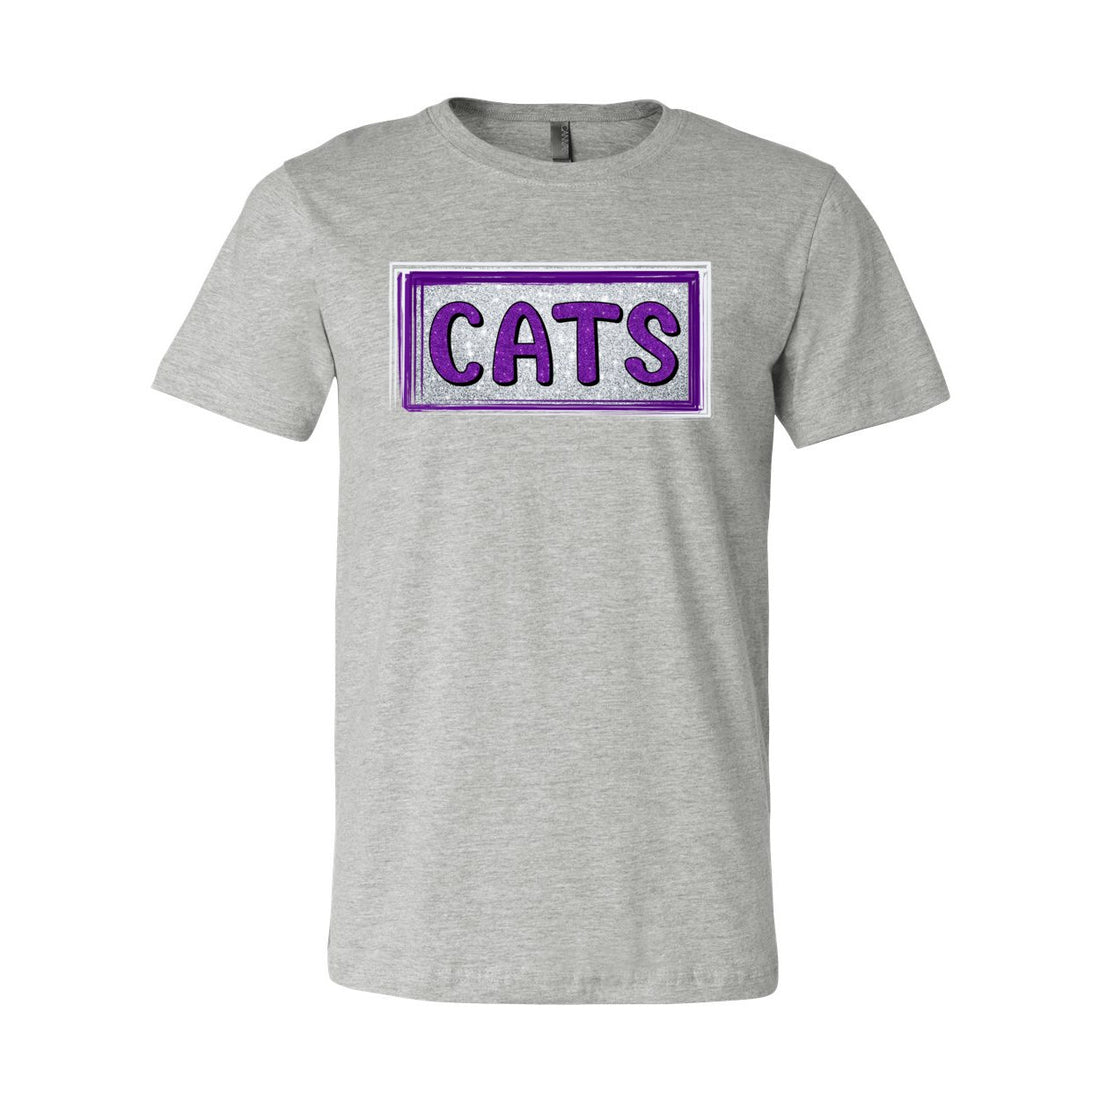 CATS Short Sleeve Jersey Tee - T-Shirts - Positively Sassy - CATS Short Sleeve Jersey Tee